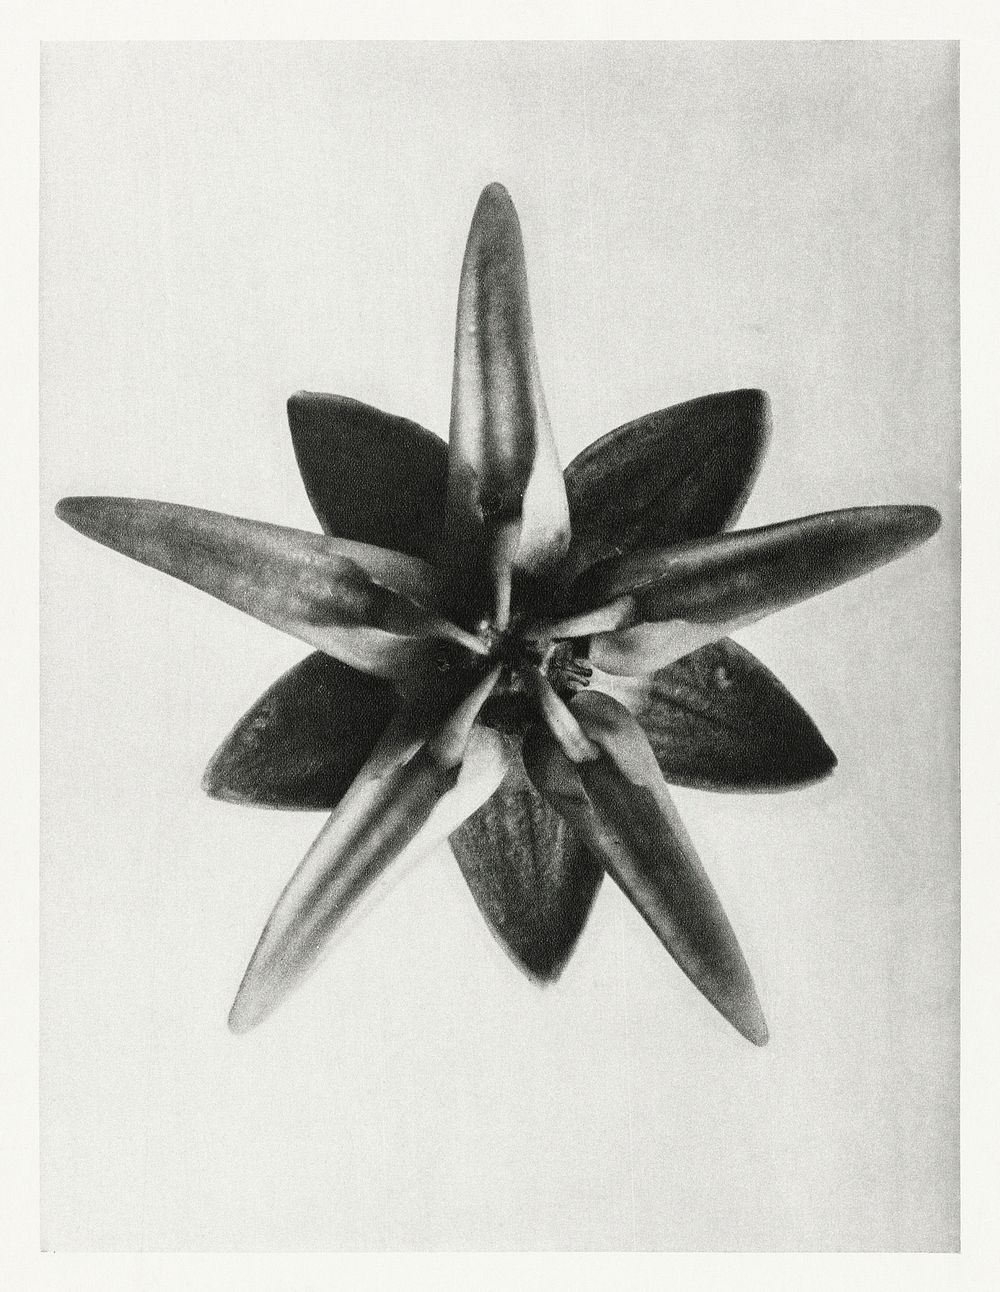 Asclepias Speciosa (Milkweed Flower) enlarged 10 times from Urformen der Kunst (1928) by Karl Blossfeldt. Original from The…